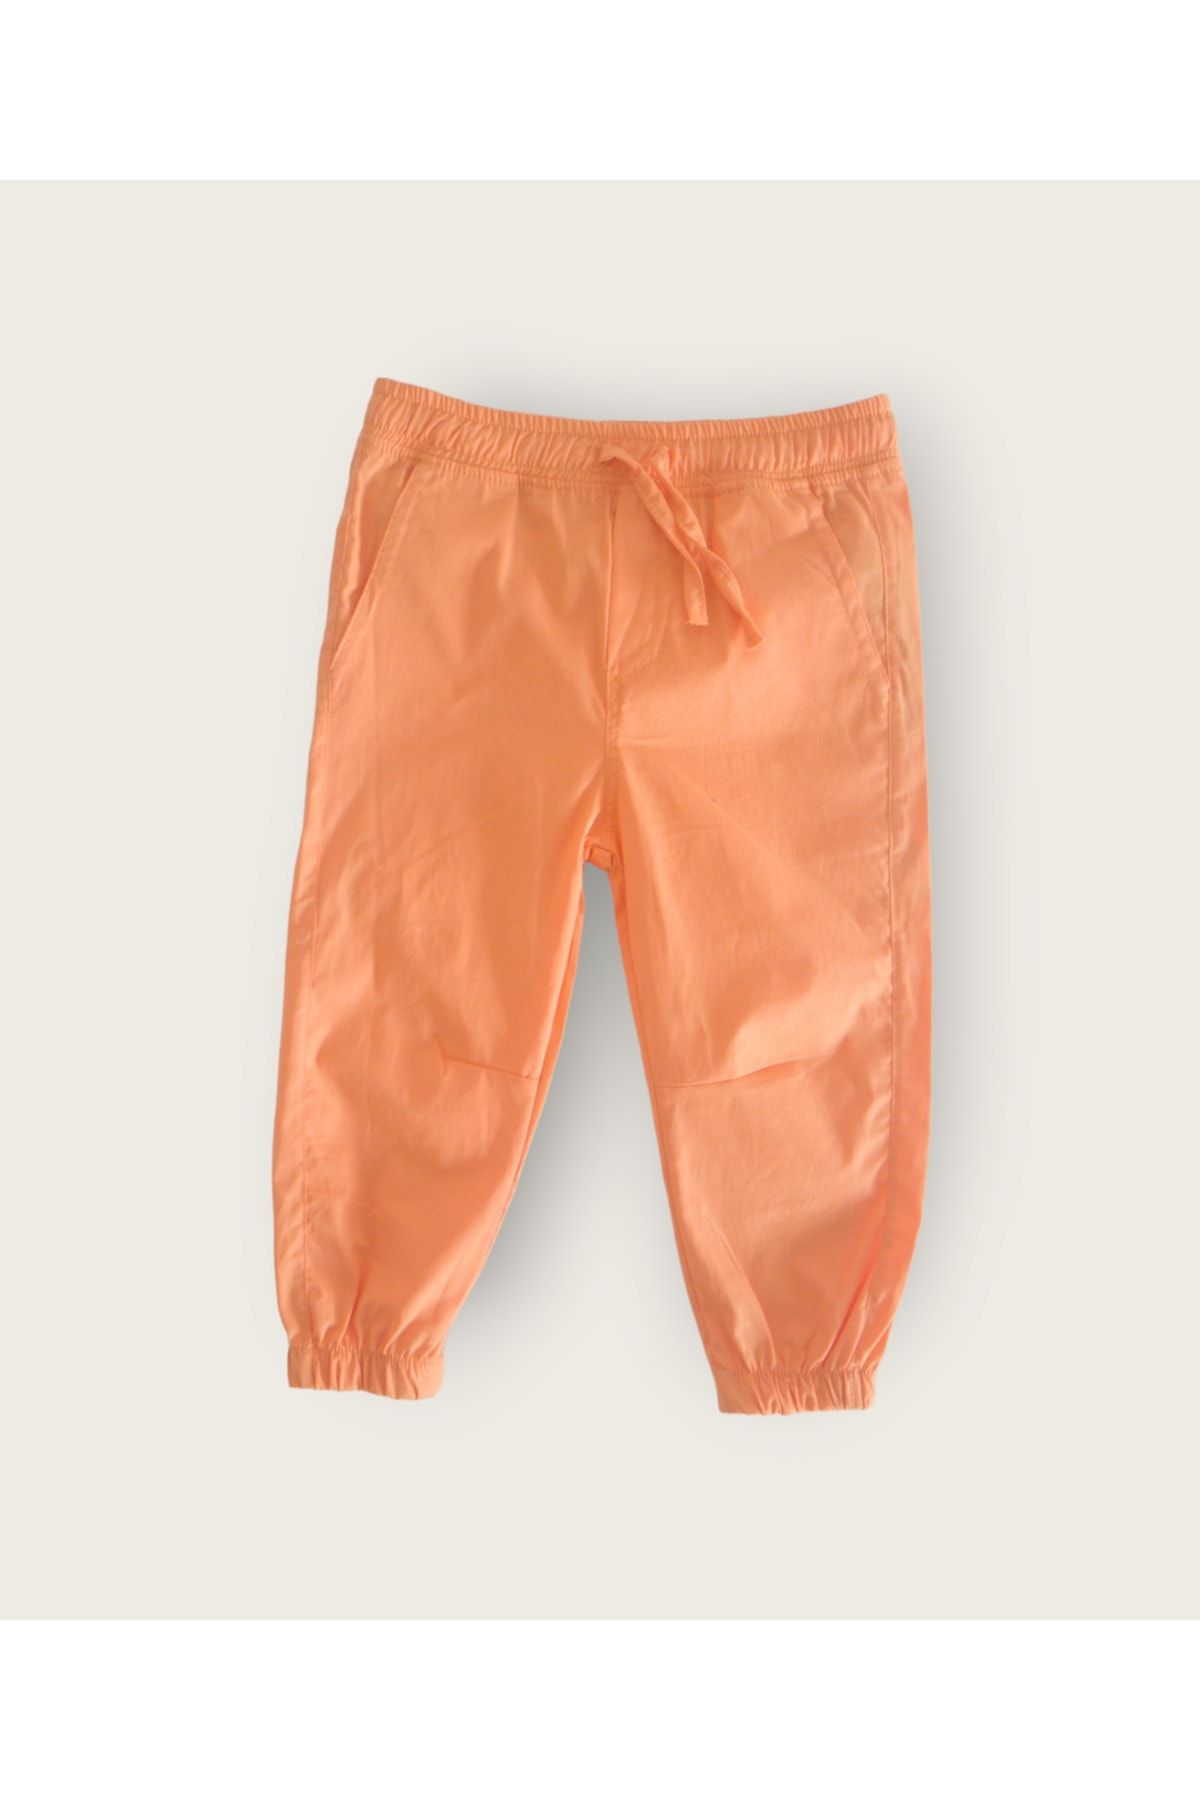 Divonette turuncu renk unisex çocuk cepli paçası ve beli lastikli dokuma pantolon